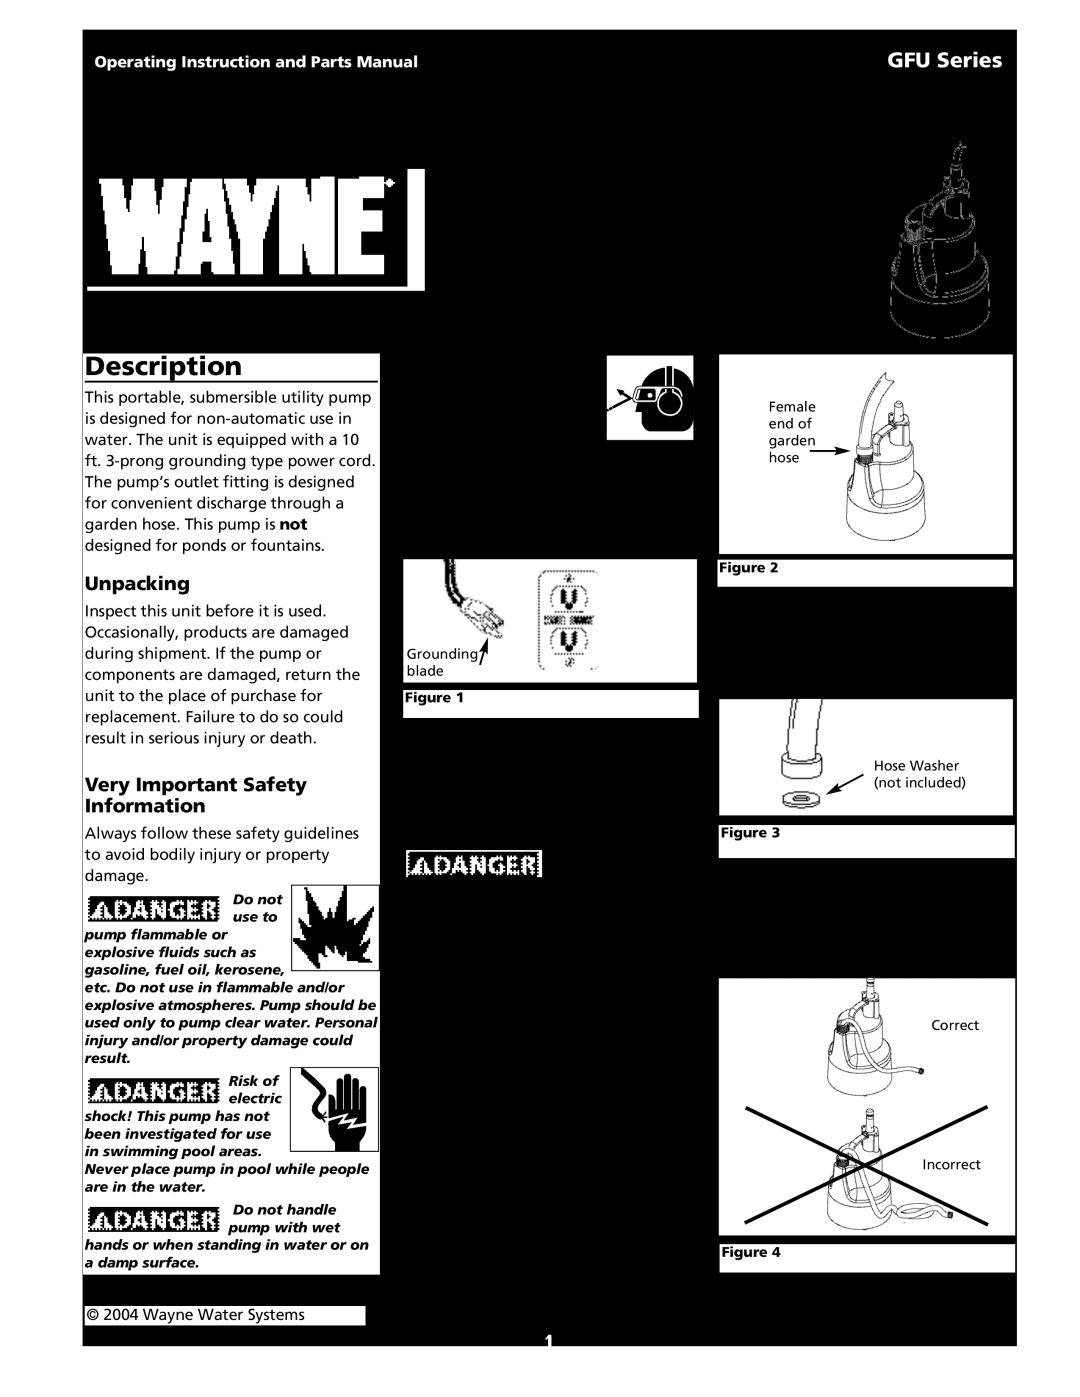 Wayne 320702-001 warranty Submersible Utility Pump, Description, Installation, GFU Series, Unpacking 